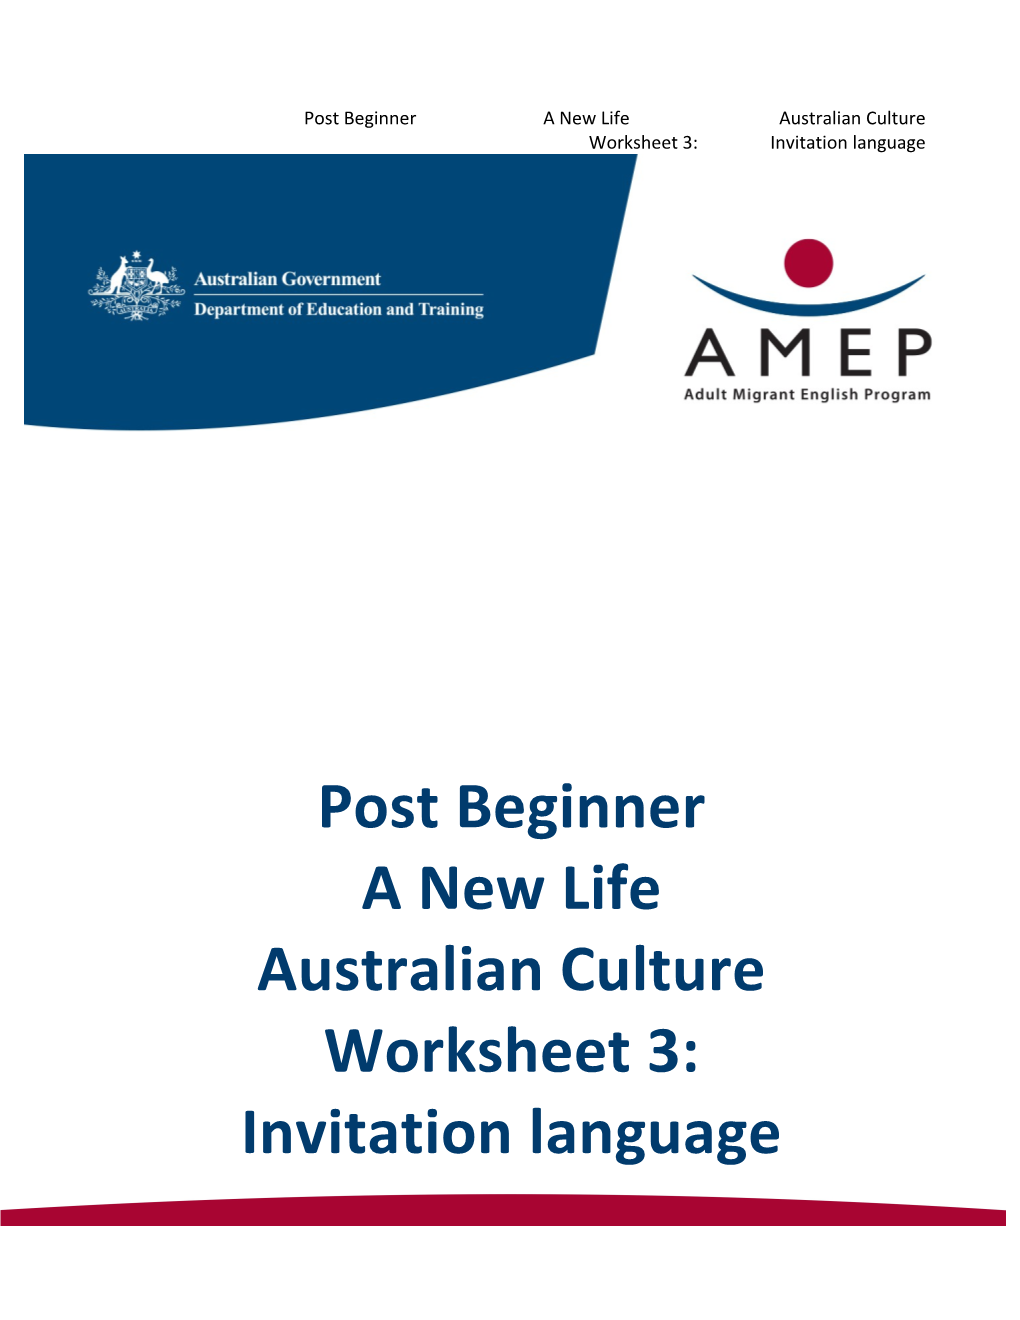 Post Beginner a New Life Australian Culture Worksheet 3: Invitation Language